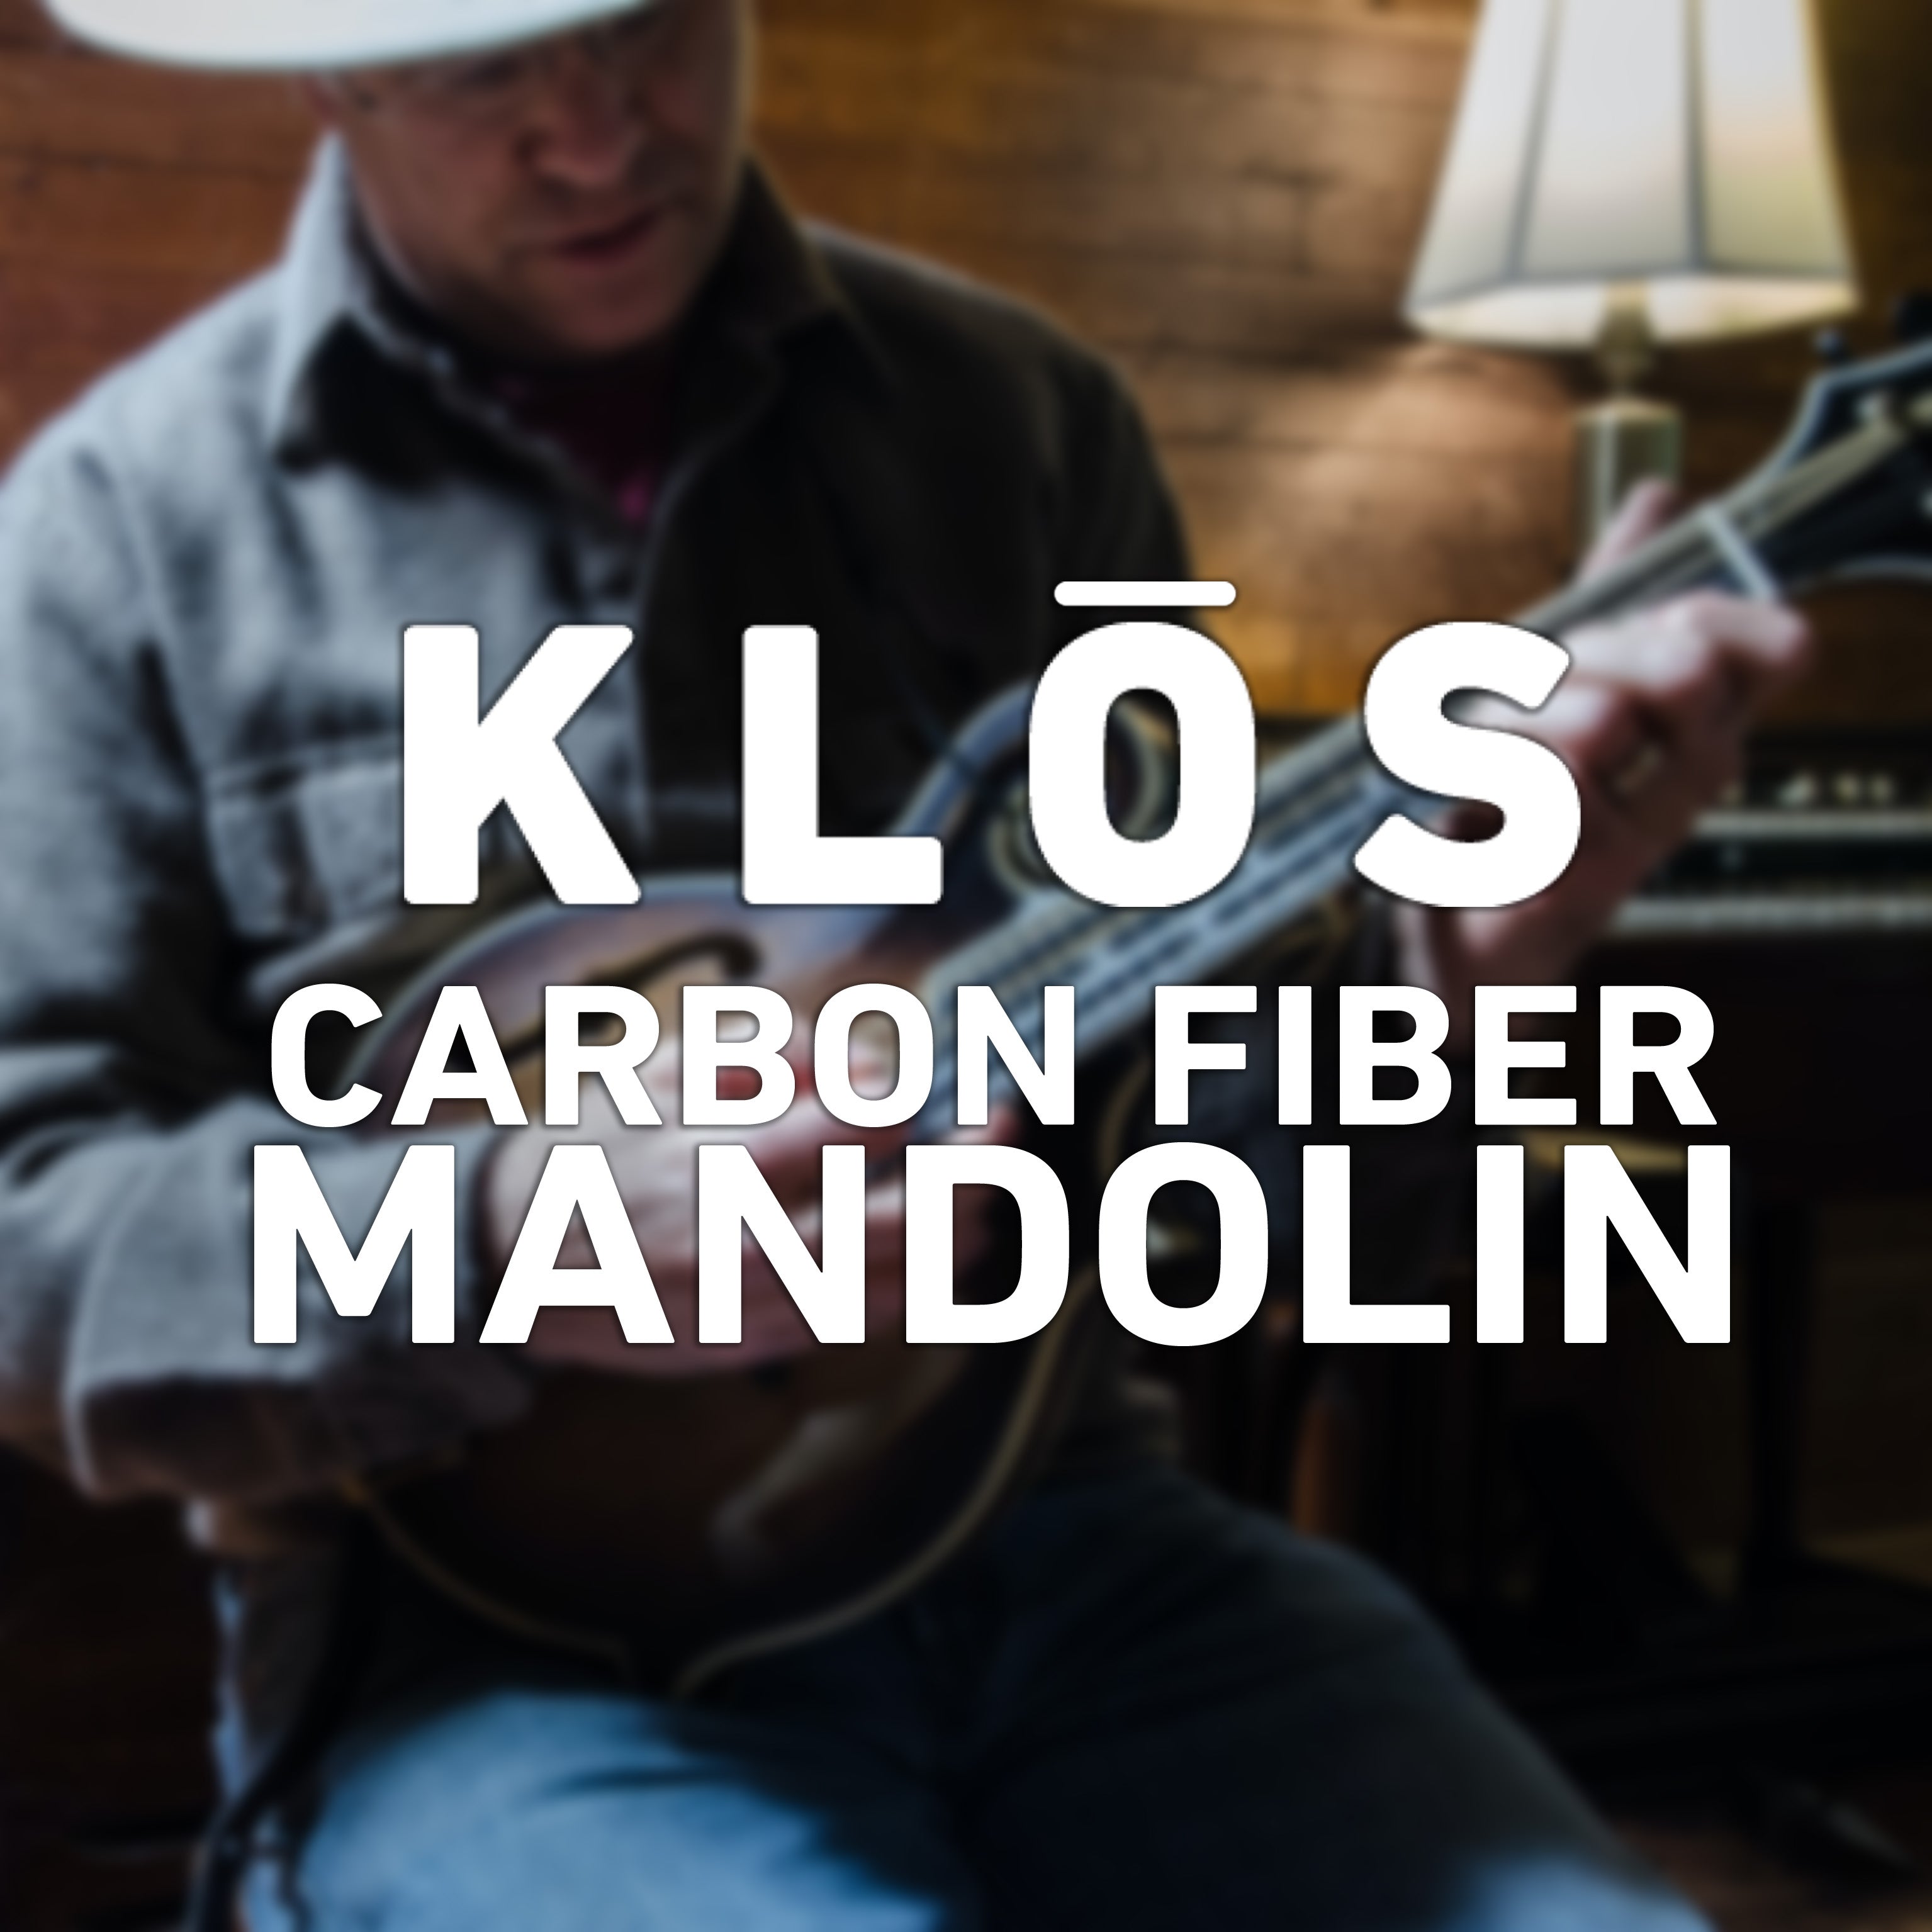 KLŌS is Making a Carbon Fiber Mandolin